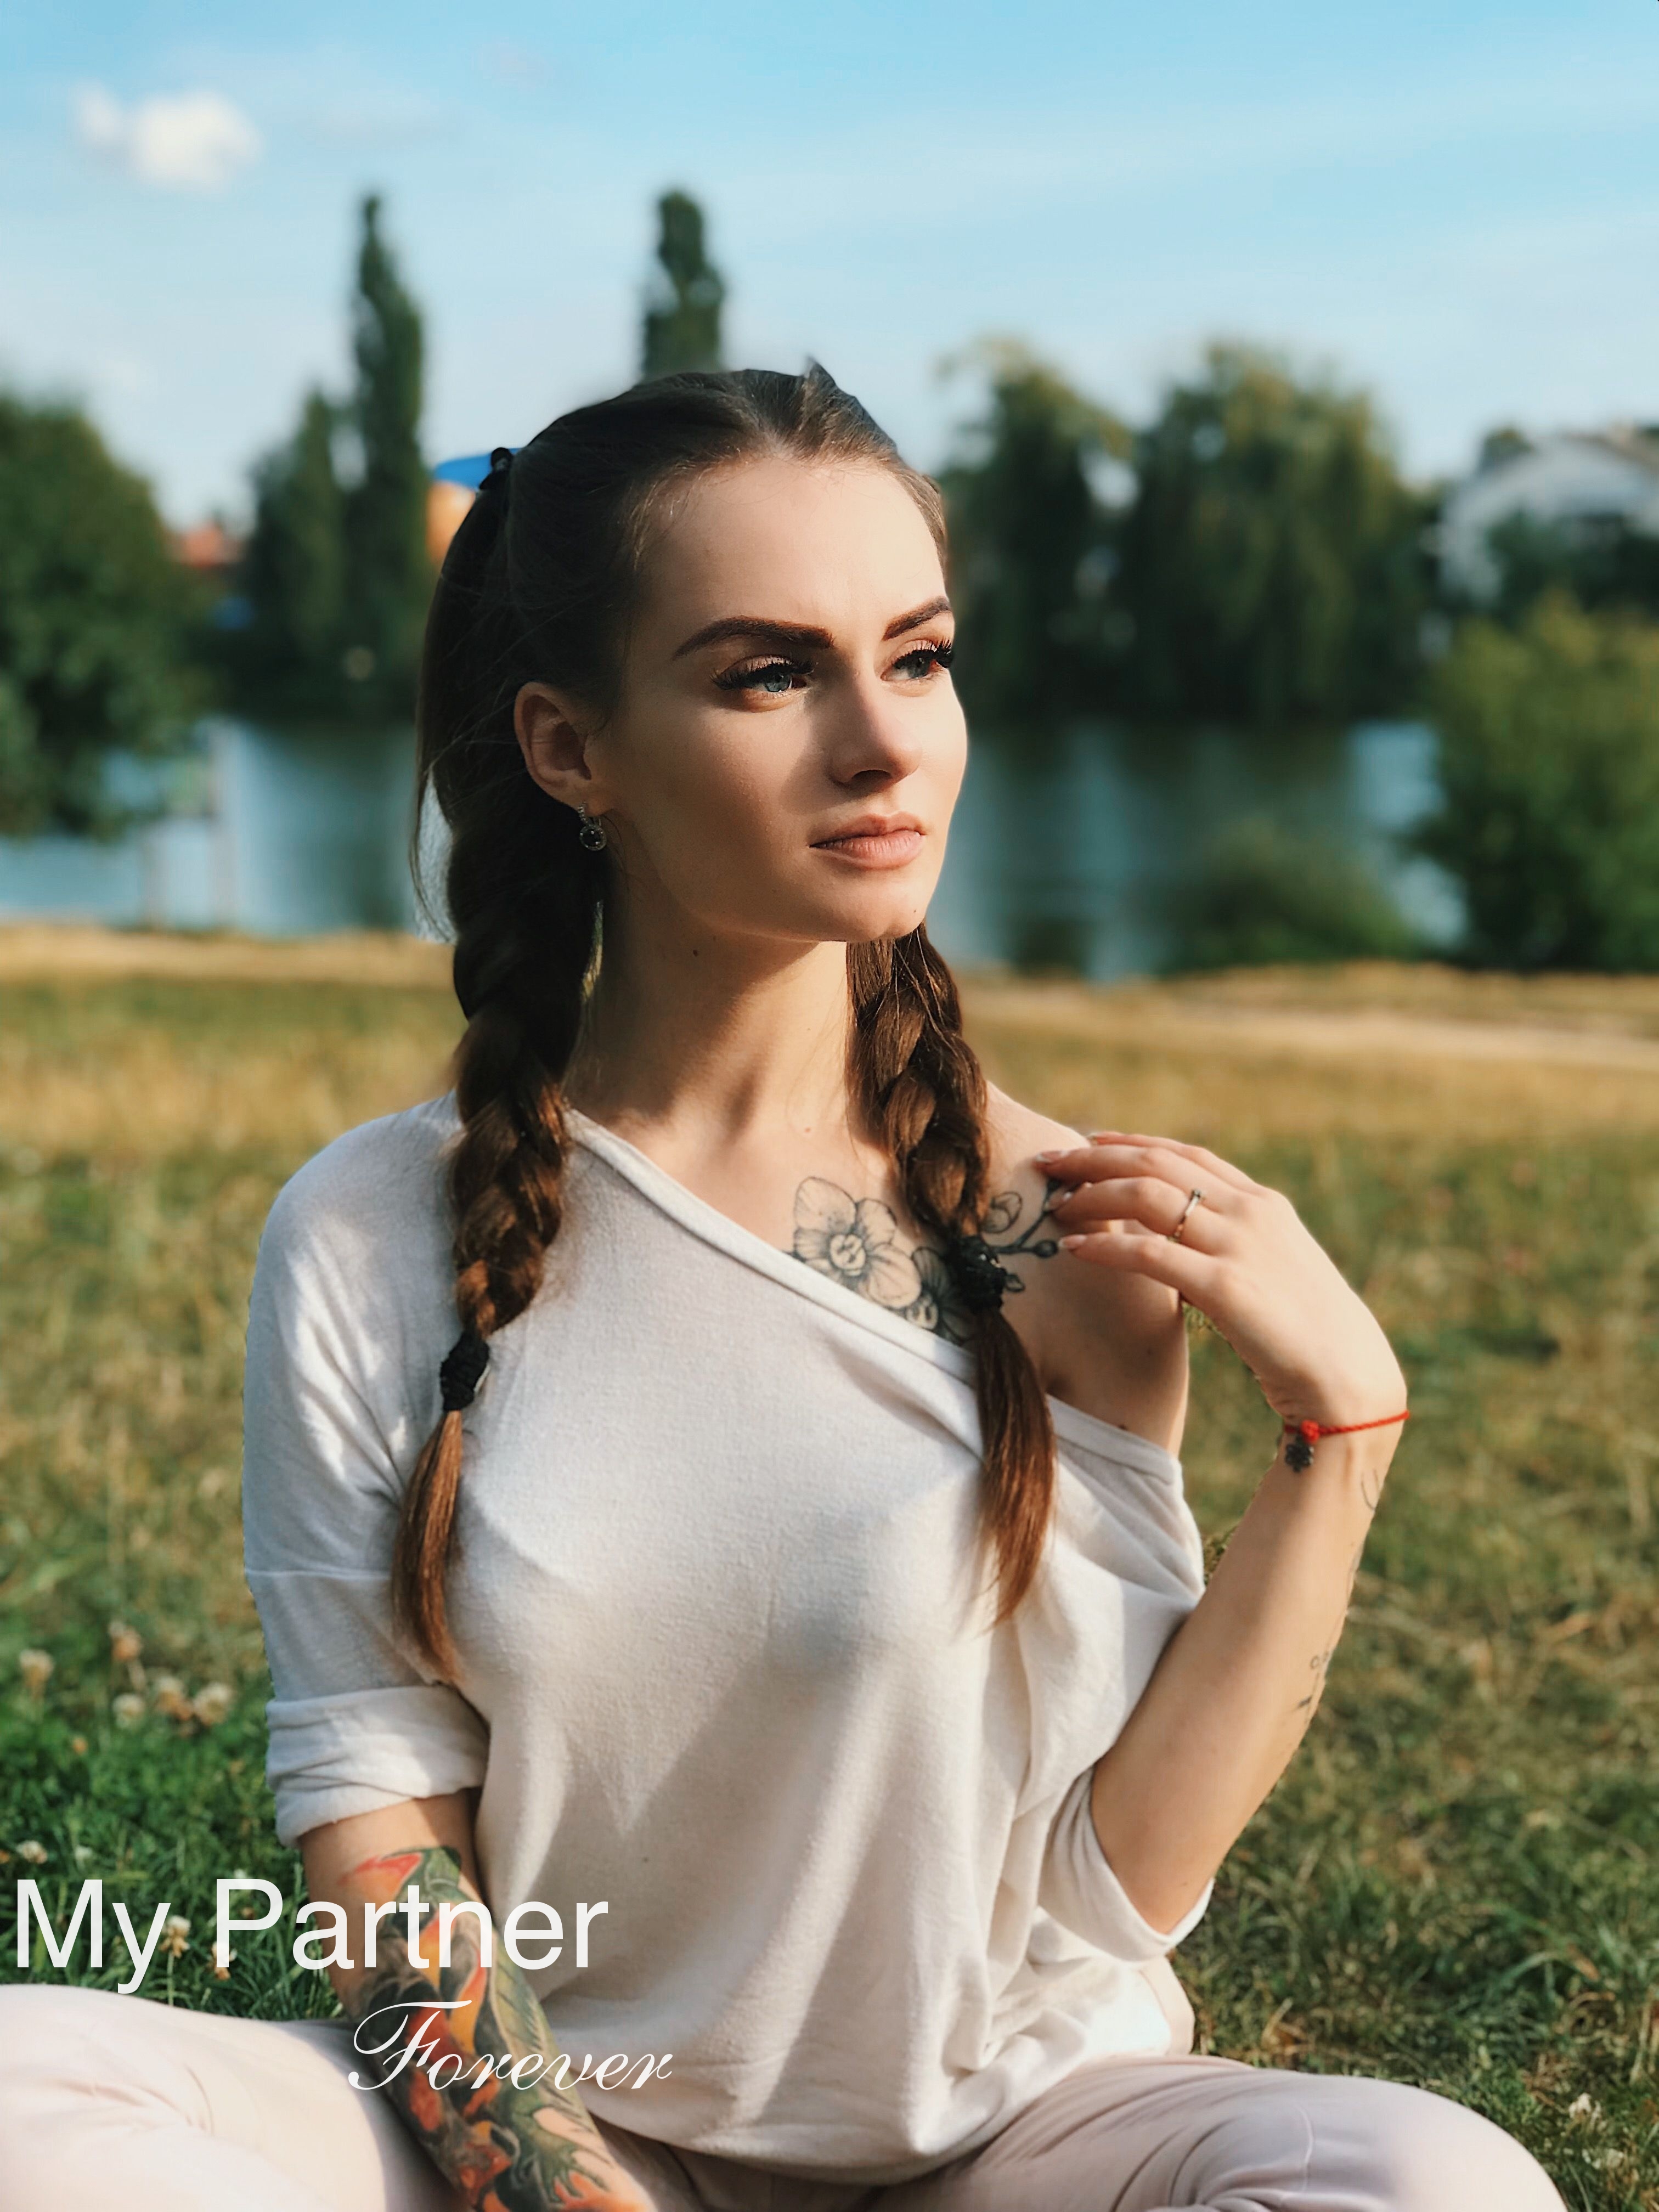 Dating Service to Meet Gorgeous Ukrainian Woman Katrina from Vinnitsa, Ukraine